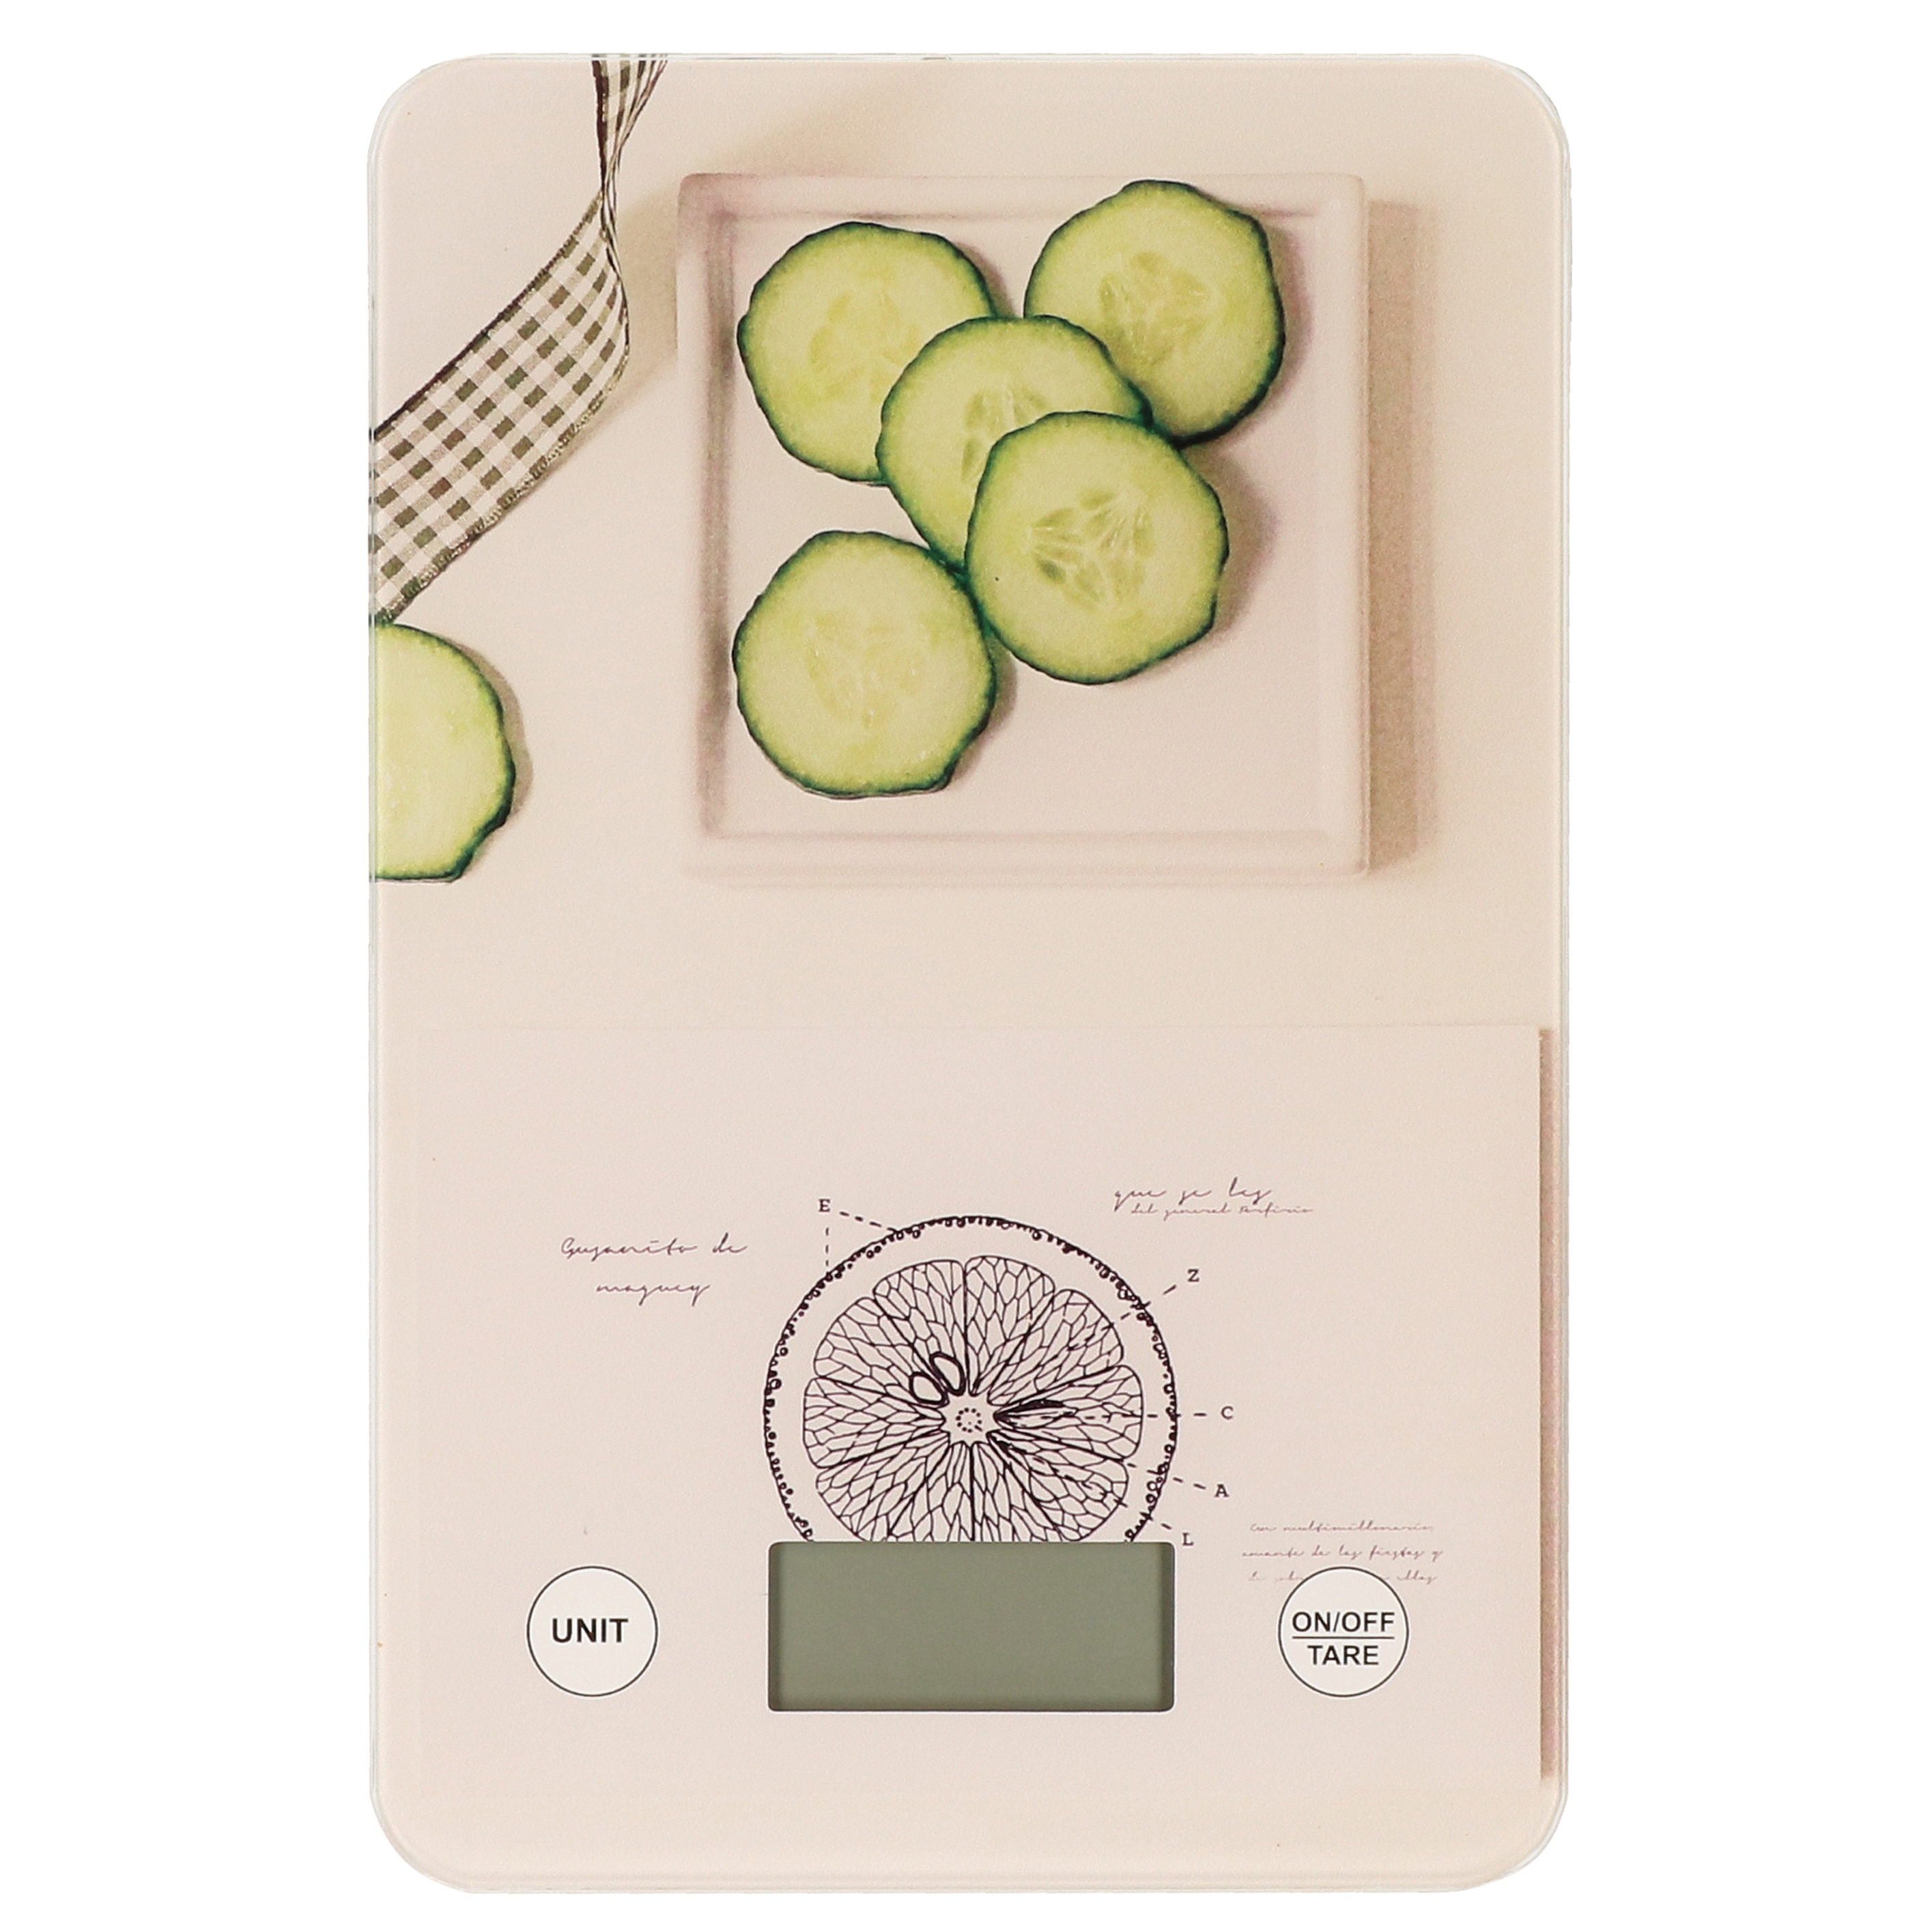 Digitale keukenweegschaal met komkommer druk RVS 23 x 15 cm